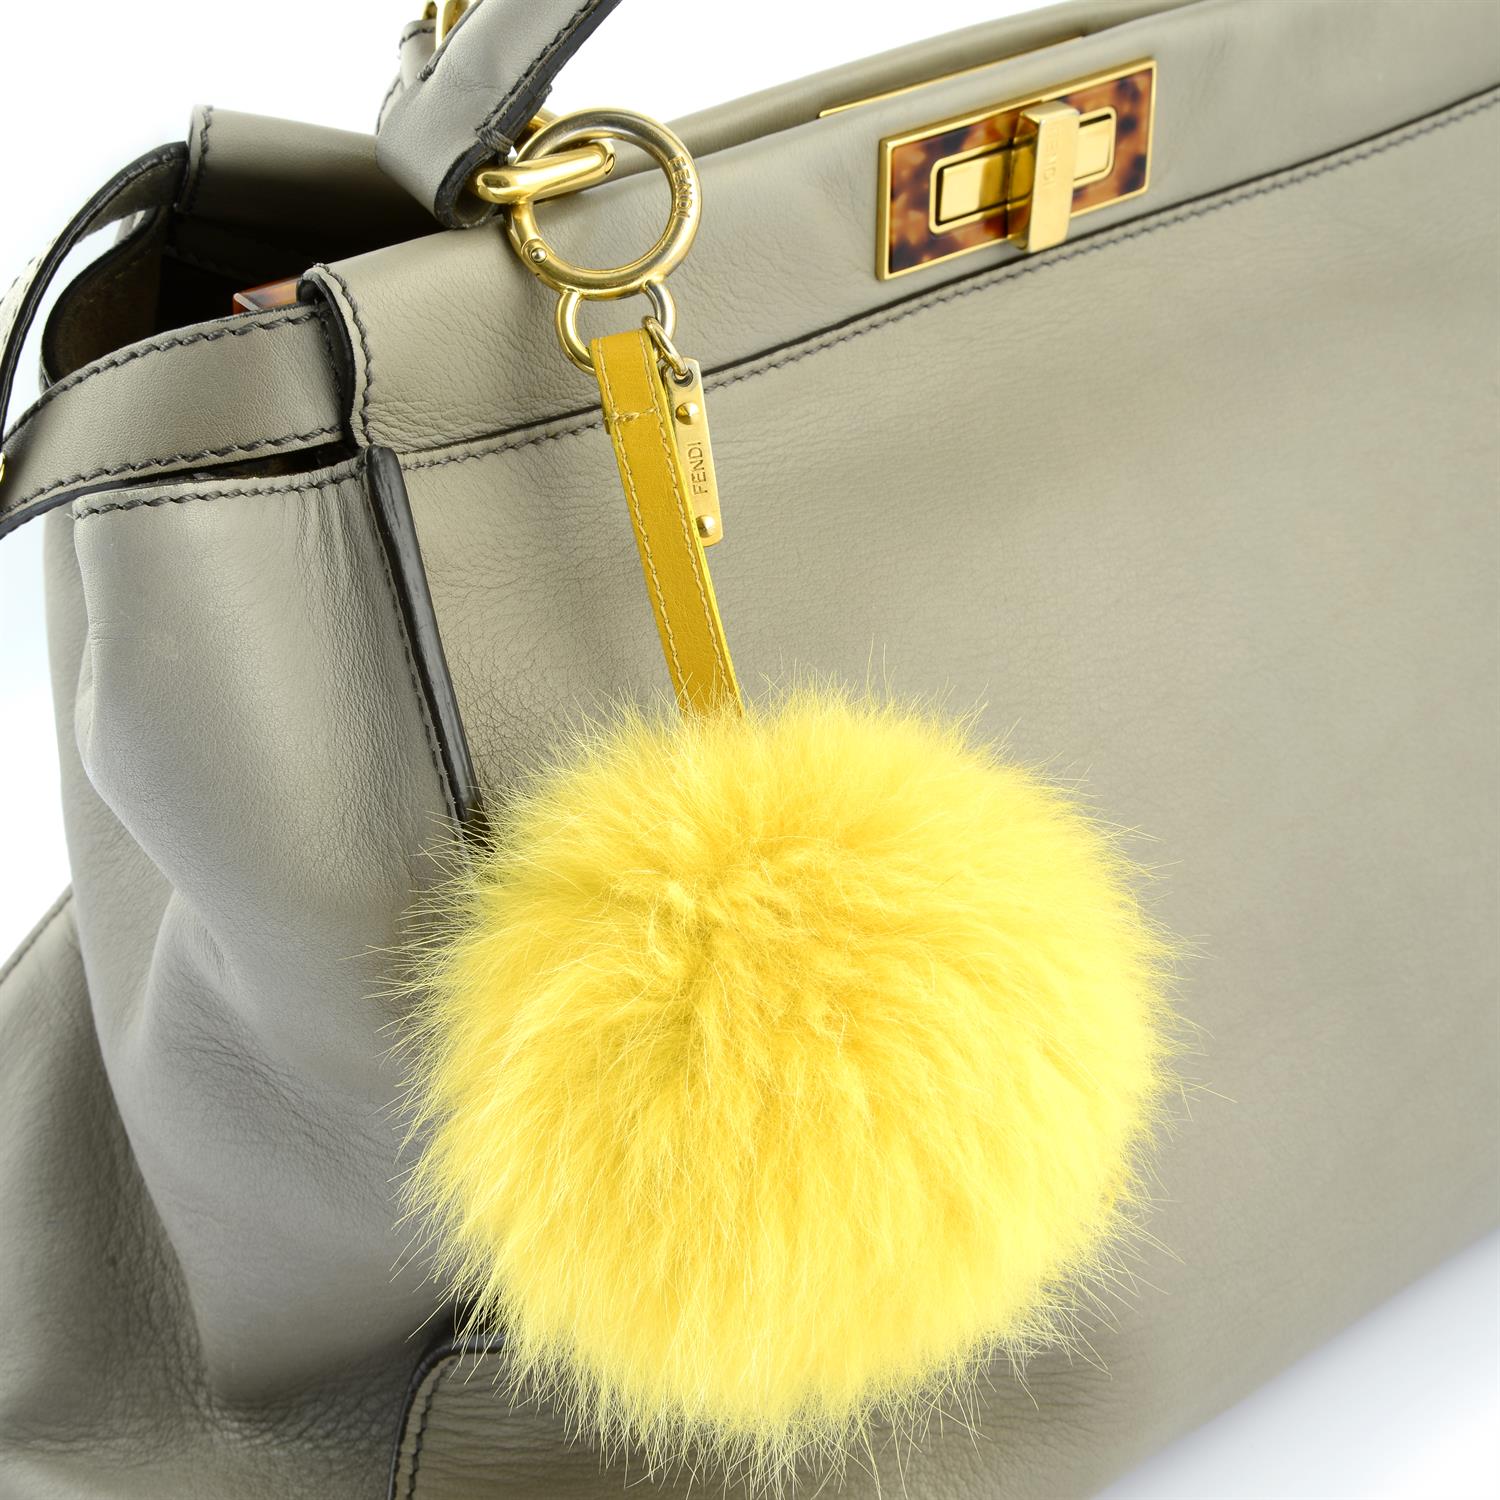 FENDI - a grey leather Peekaboo tote bag with yellow fox fur pompom. - Image 5 of 5